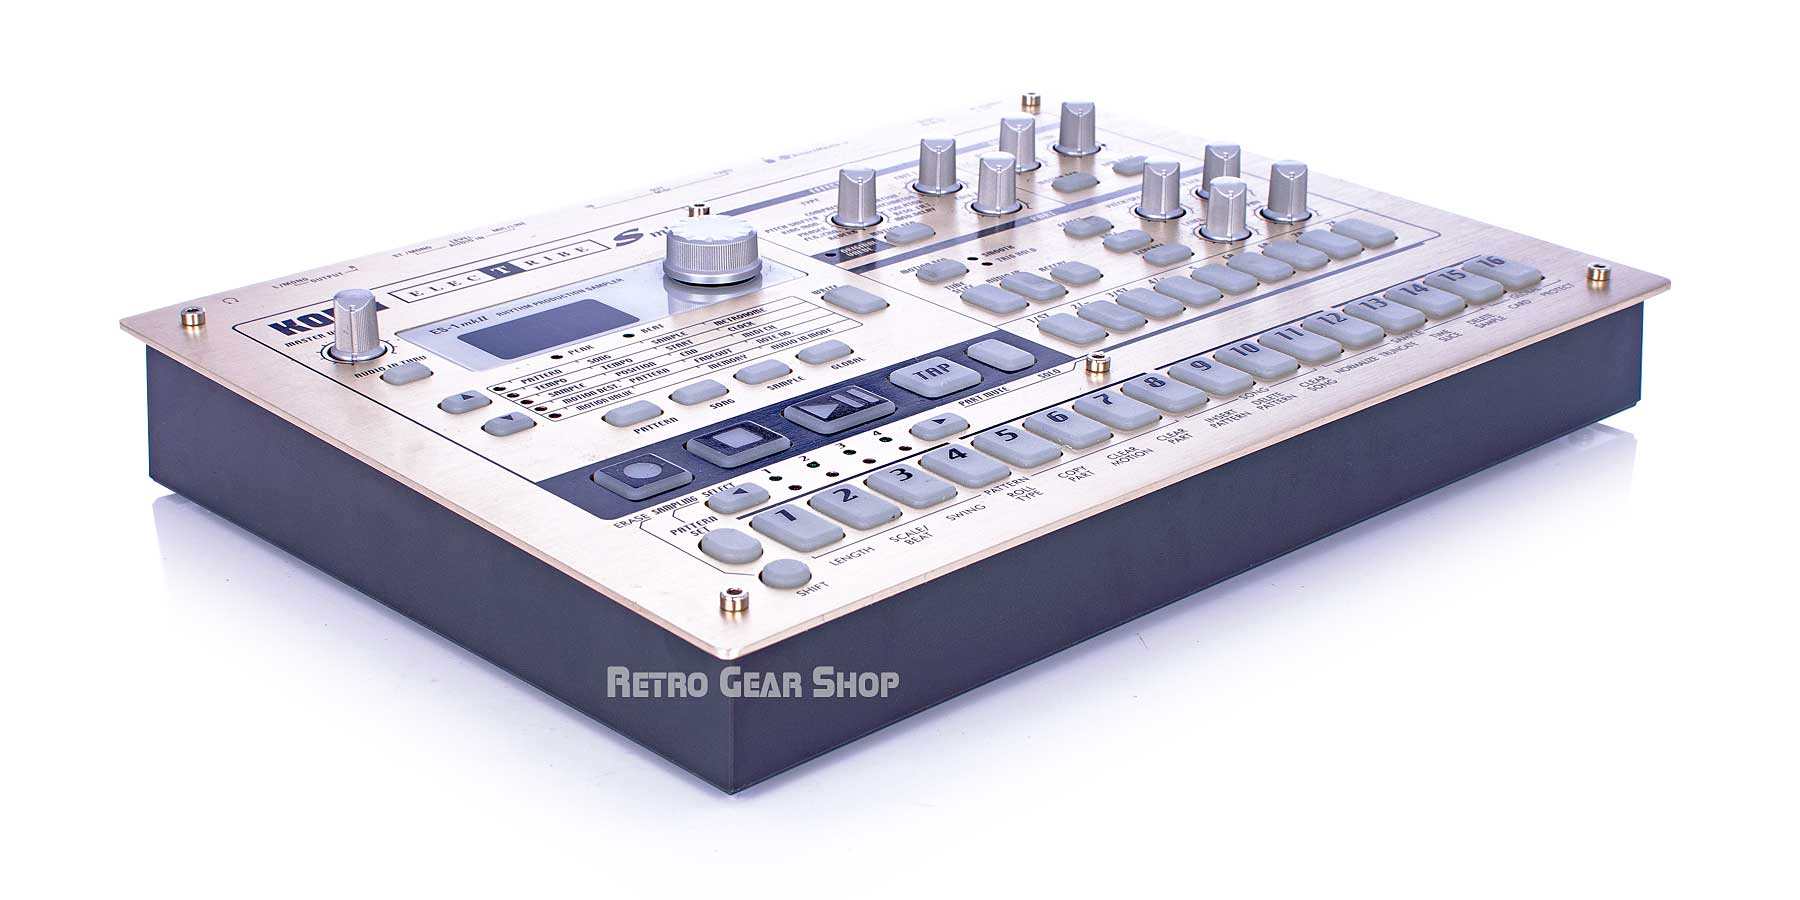 Korg Electribe ES-1 Mk2 MkII Rhythm Production Sampler – Retro